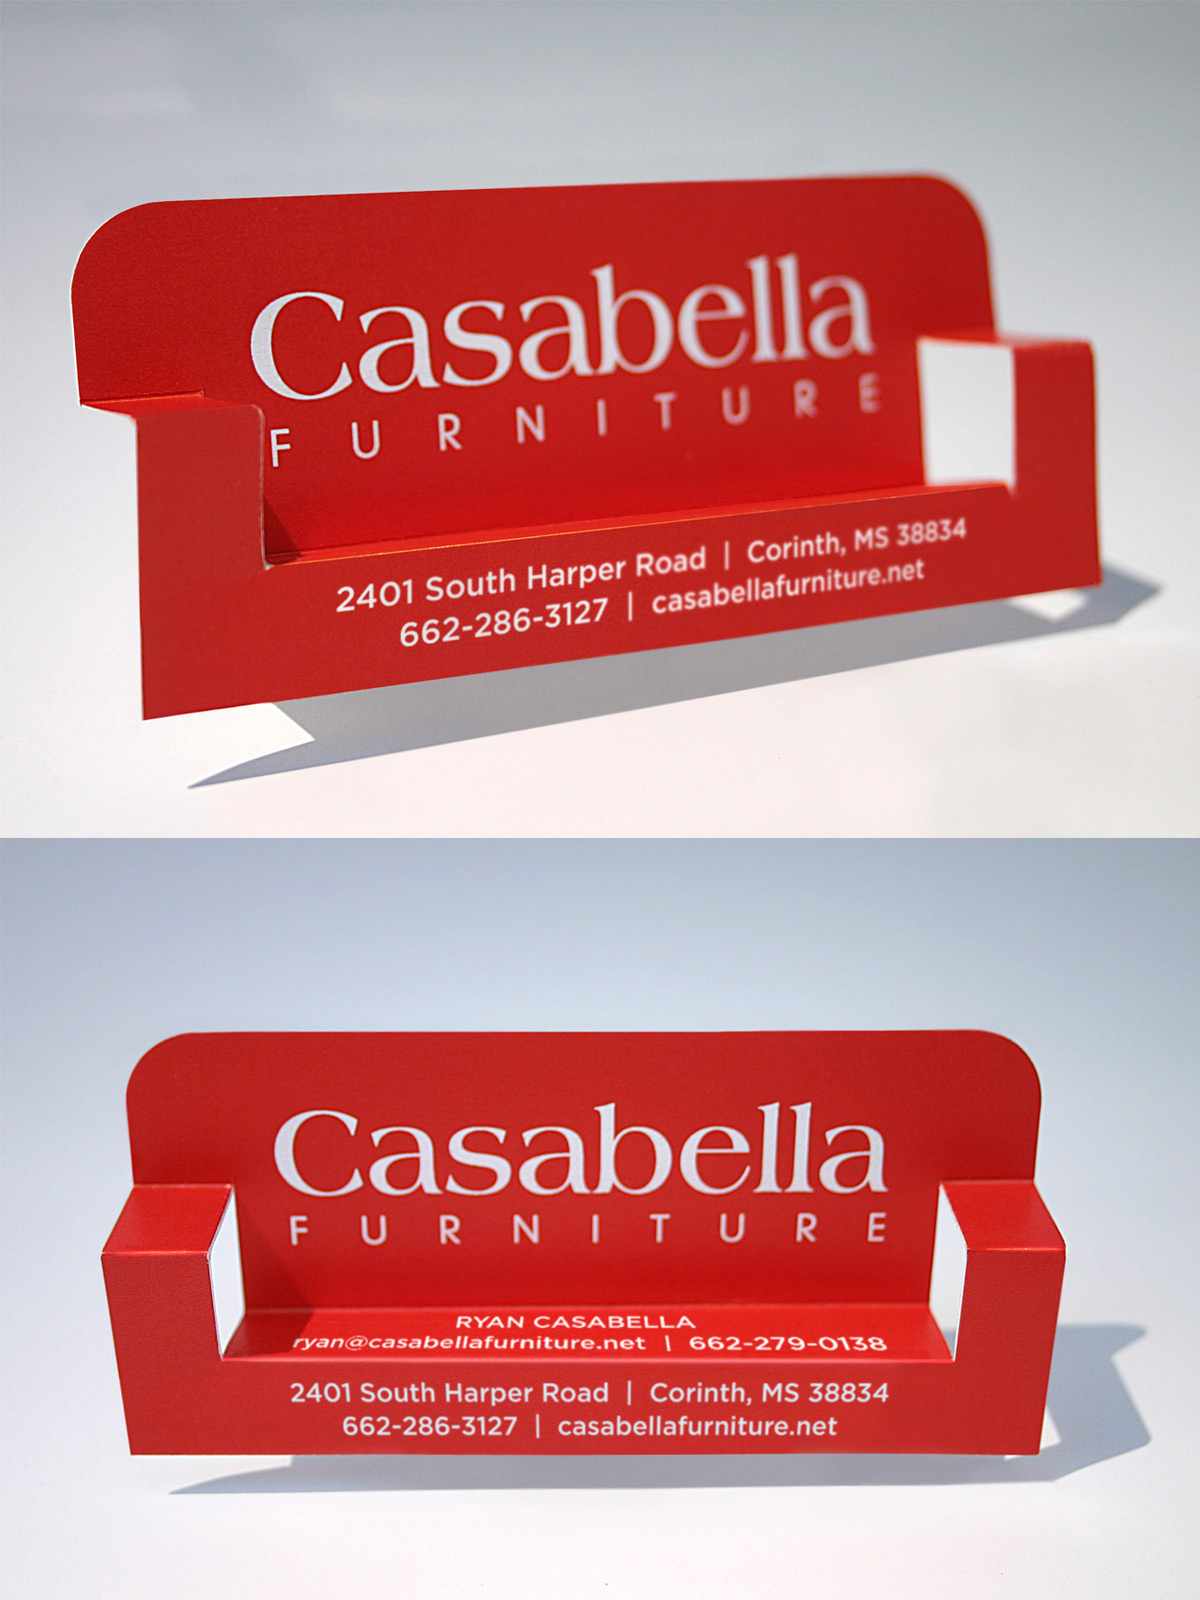 Casabella Furniture thiet ke bo nhan dien thuong hieu sang tao